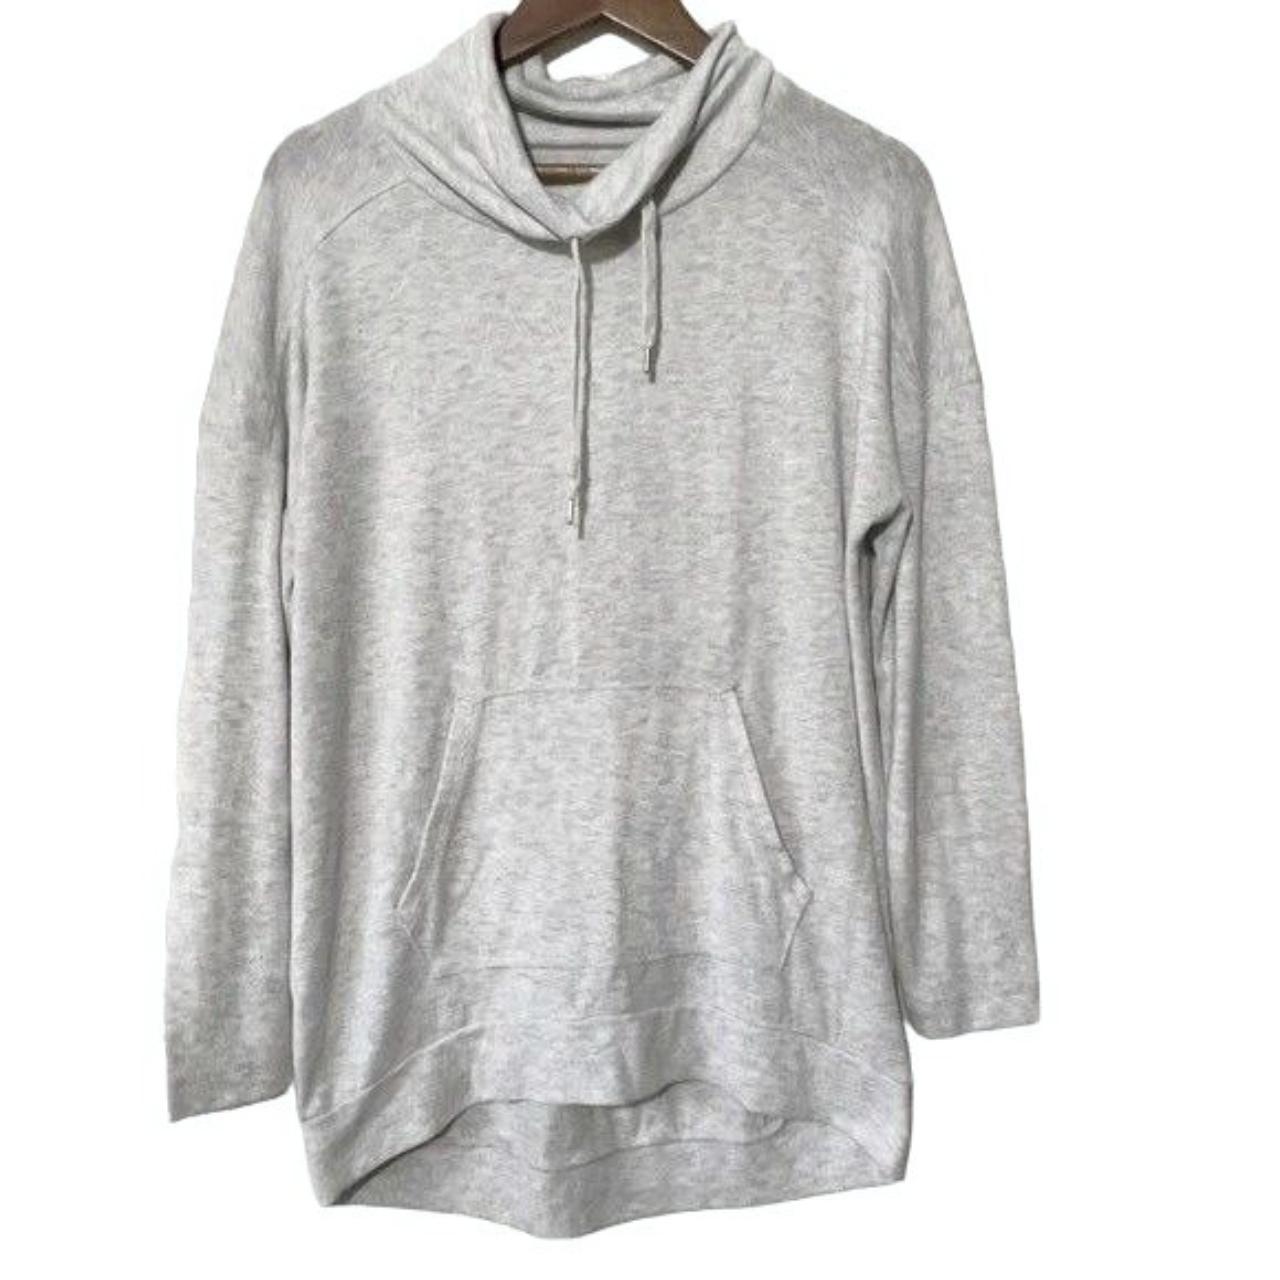 Lou & Grey Signaturesoft Sweatshirt